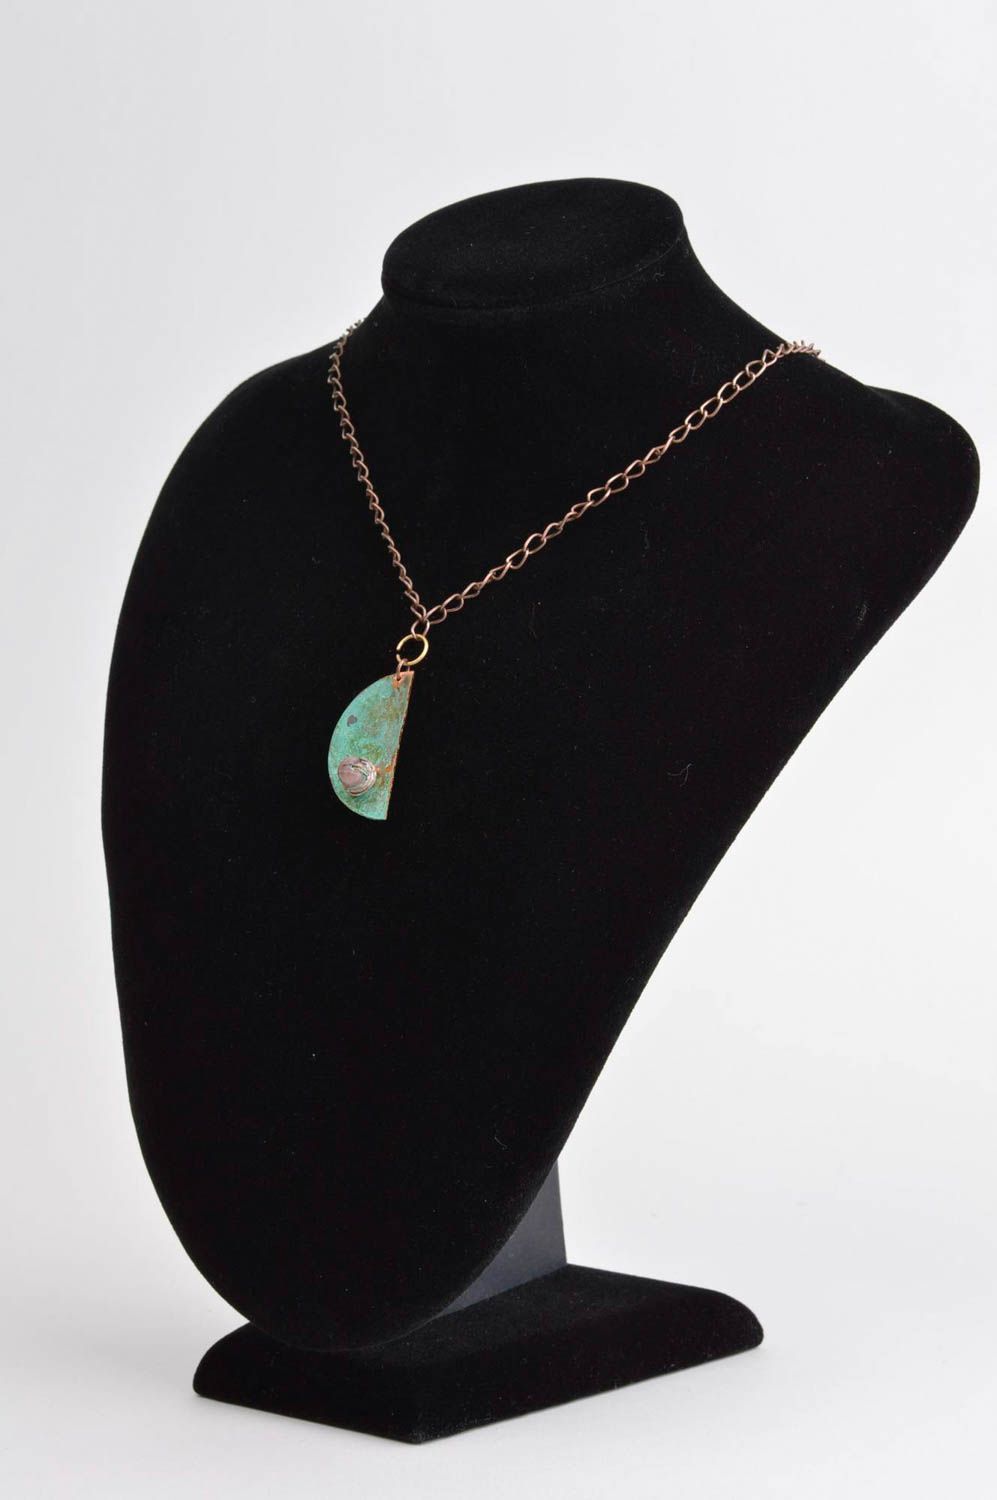 Handmade pendant unusual pendant designer accessory gift ideas copper jewelry photo 1